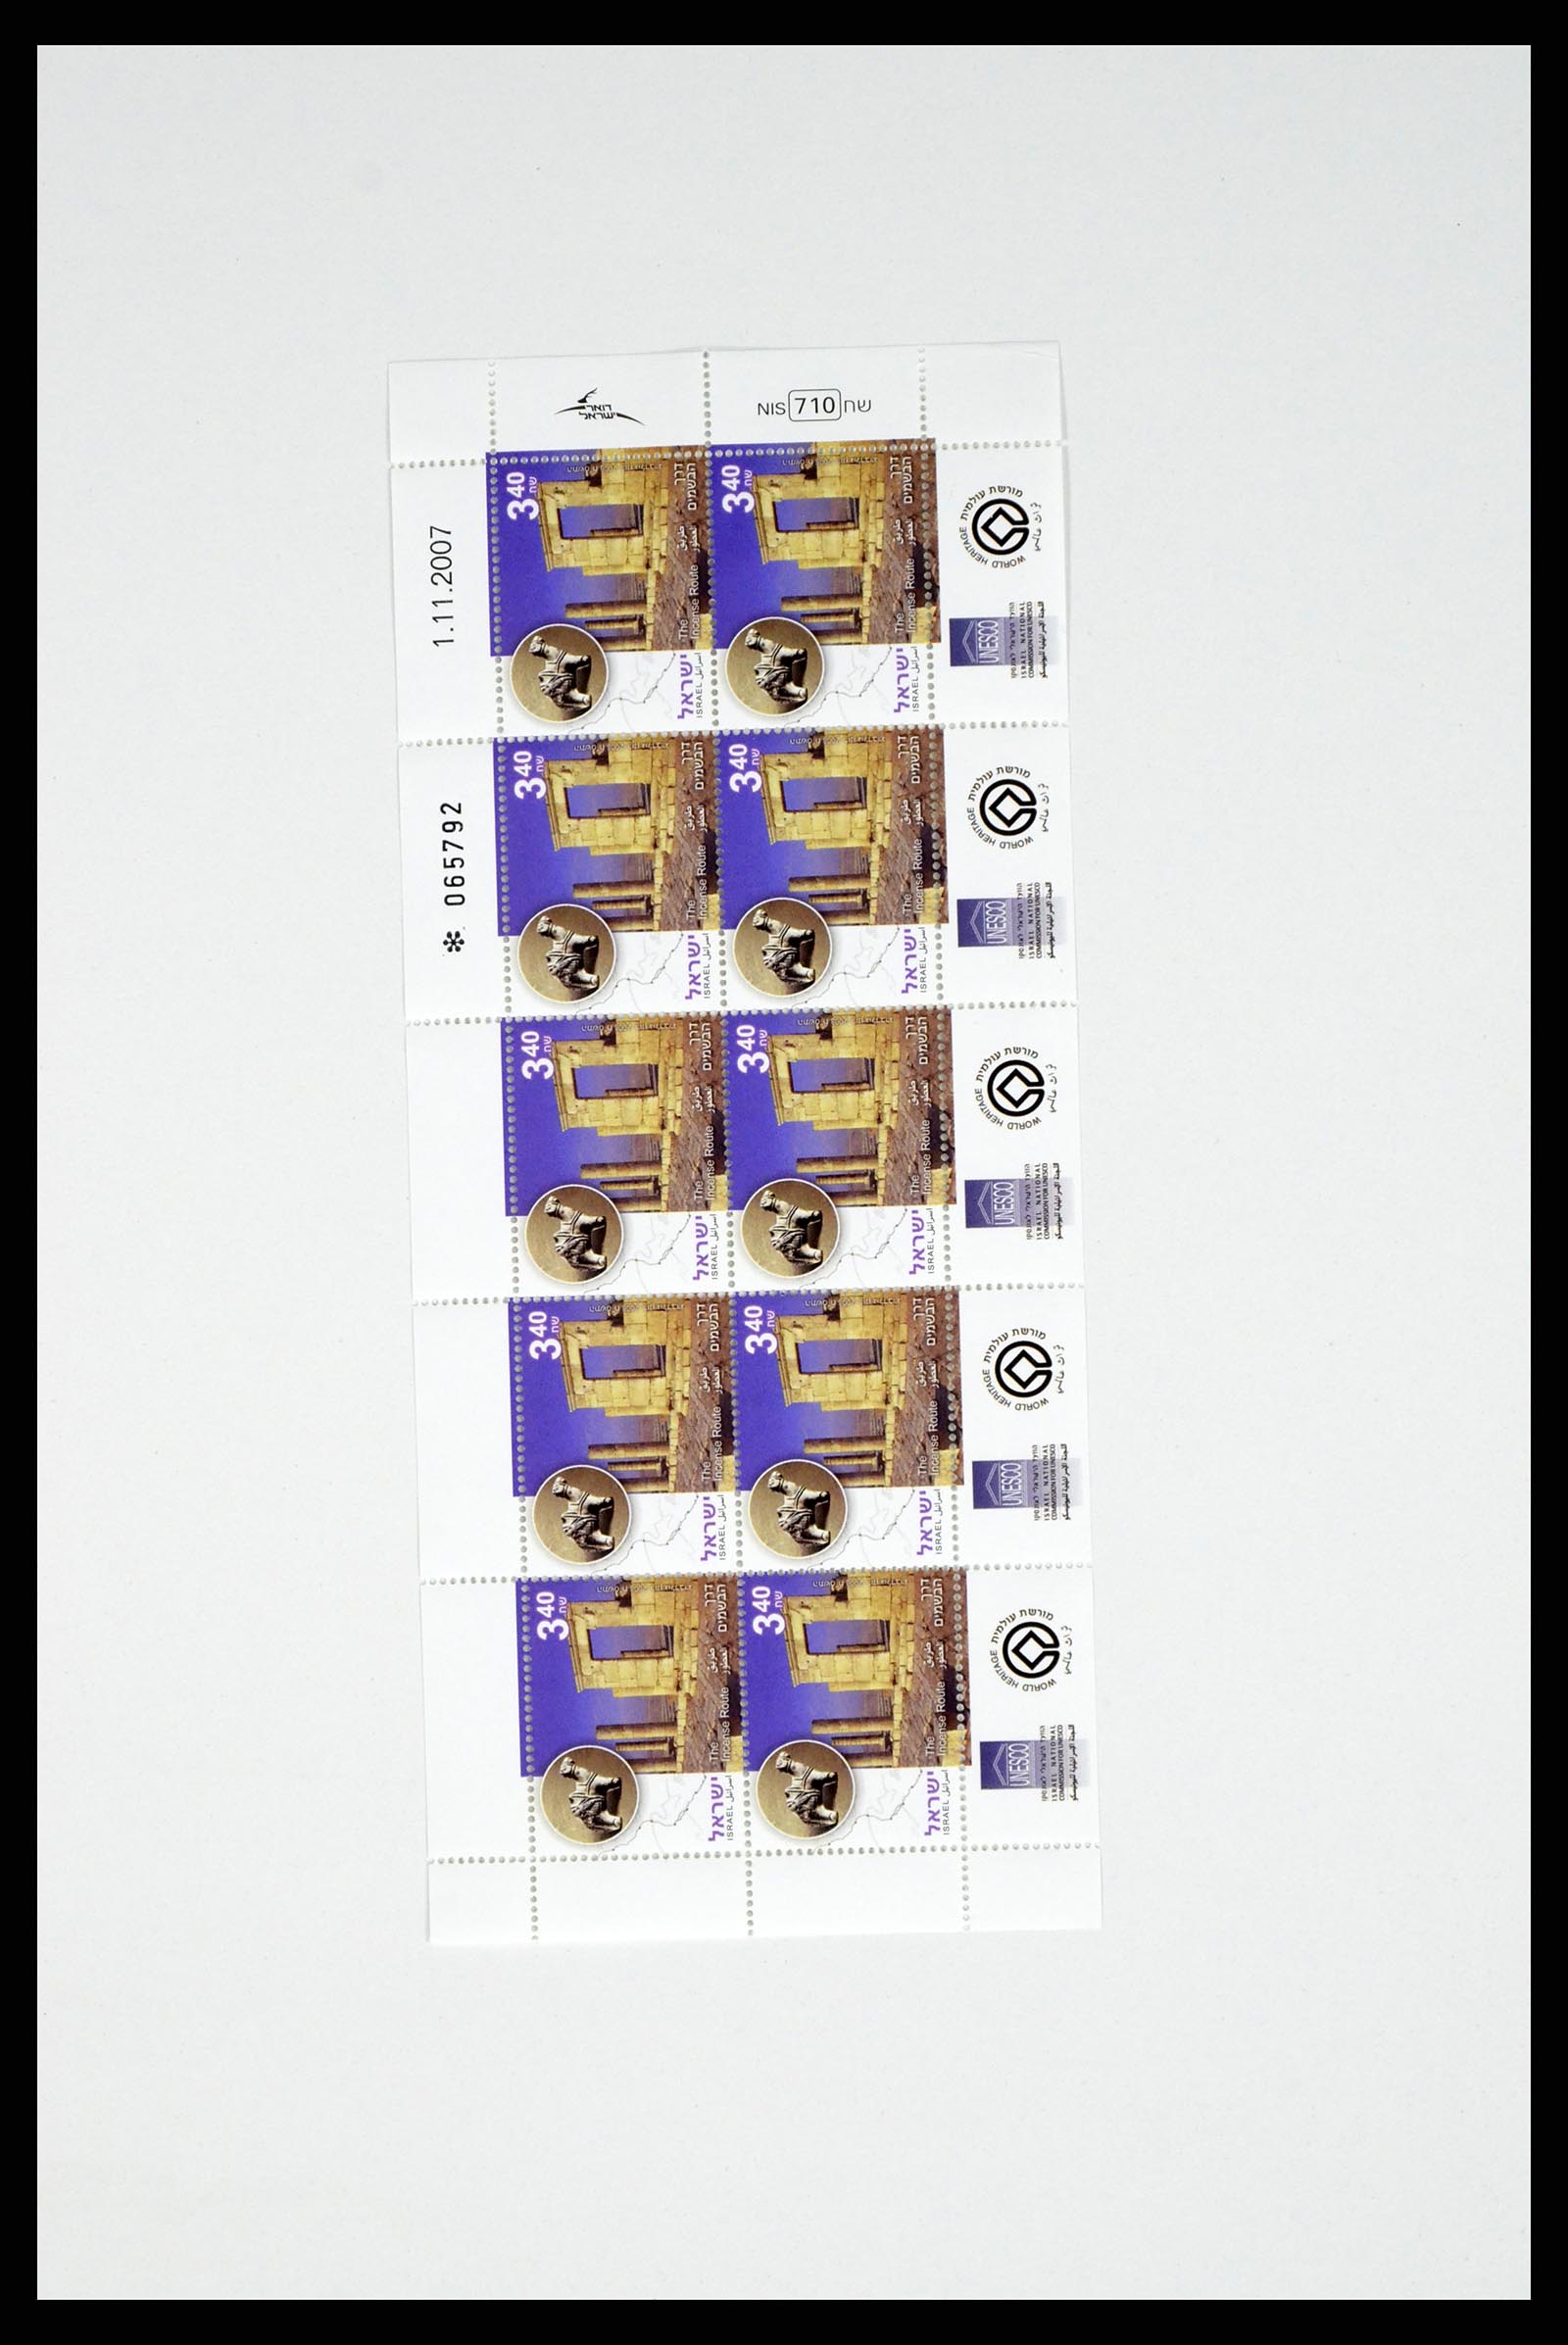 37779 069 - Stamp collection 37779 Israel sheetlets 1986-2009.